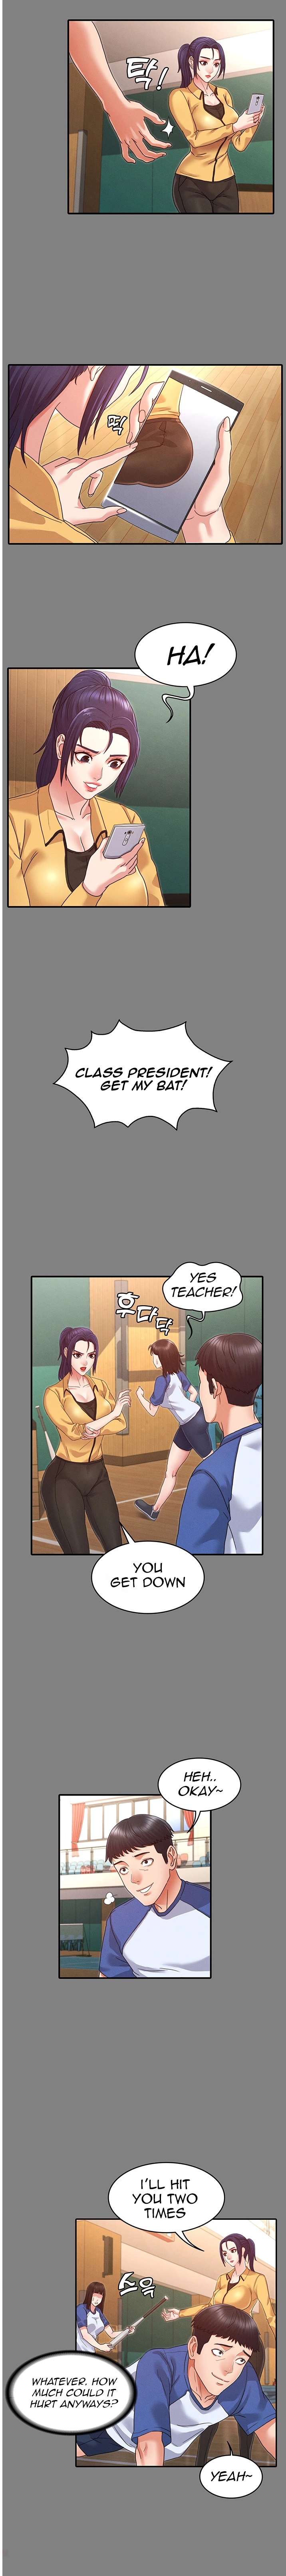 Teacher Punishment - Chapter 2 Page 6